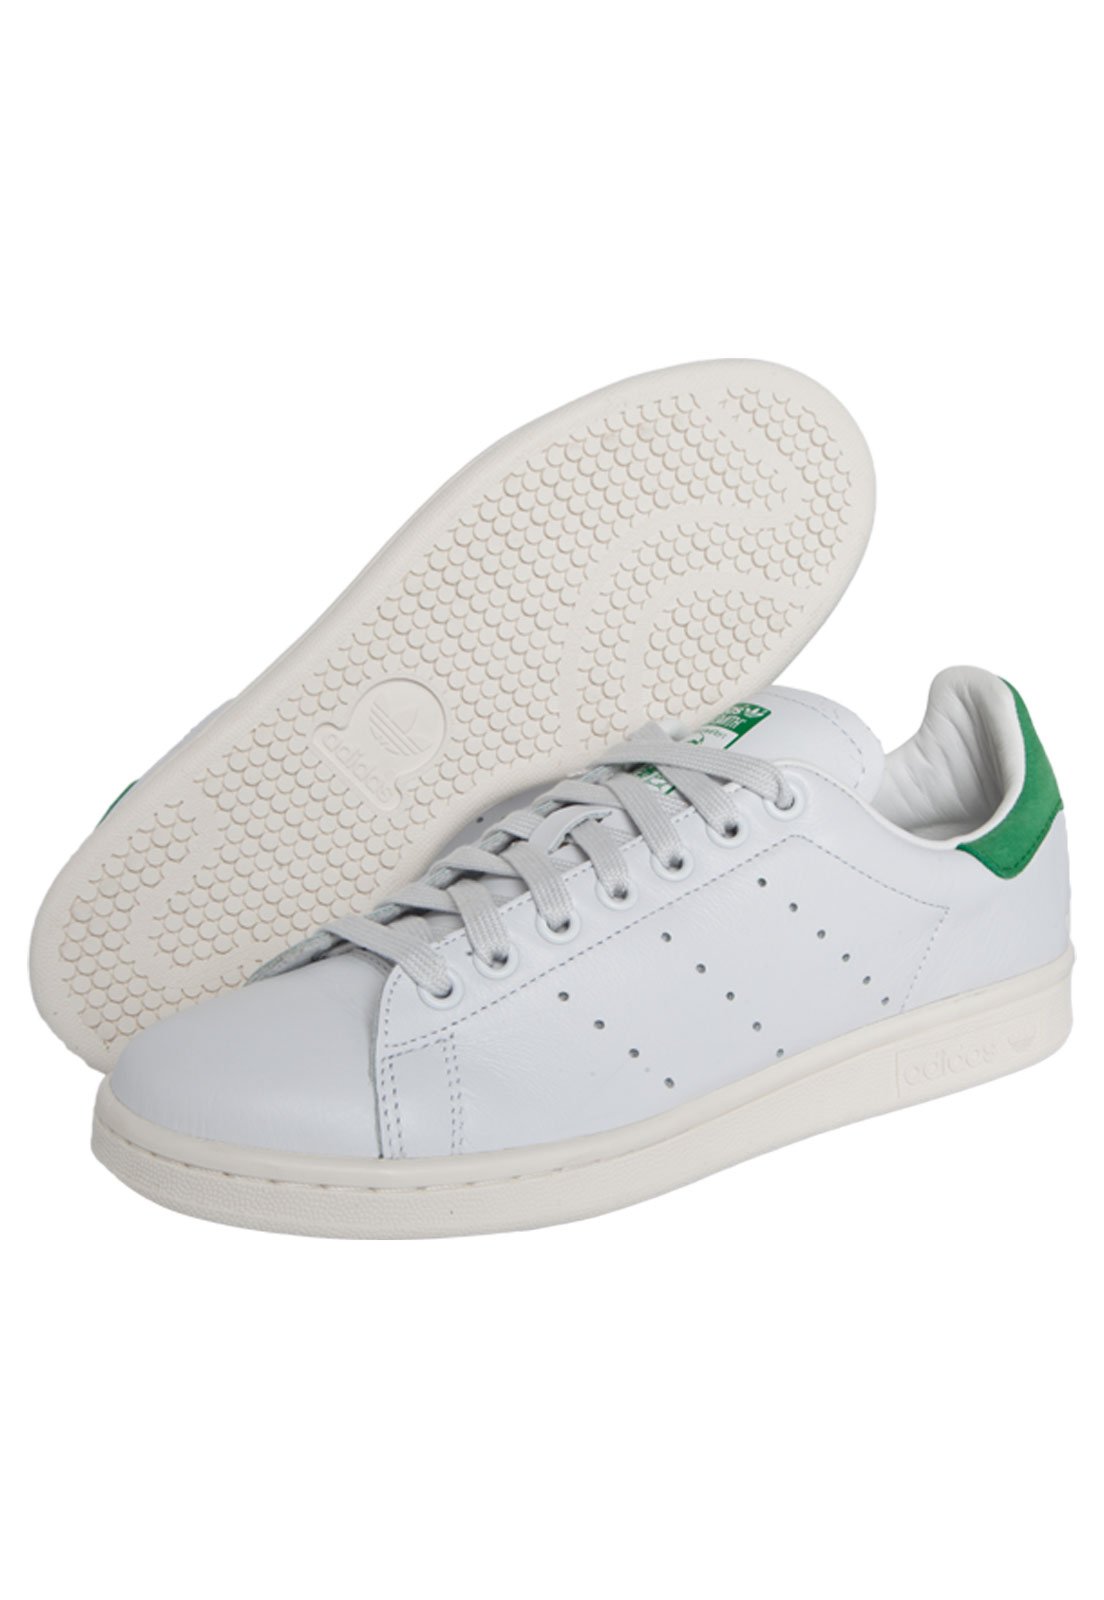 tenis adidas branco e verde feminino